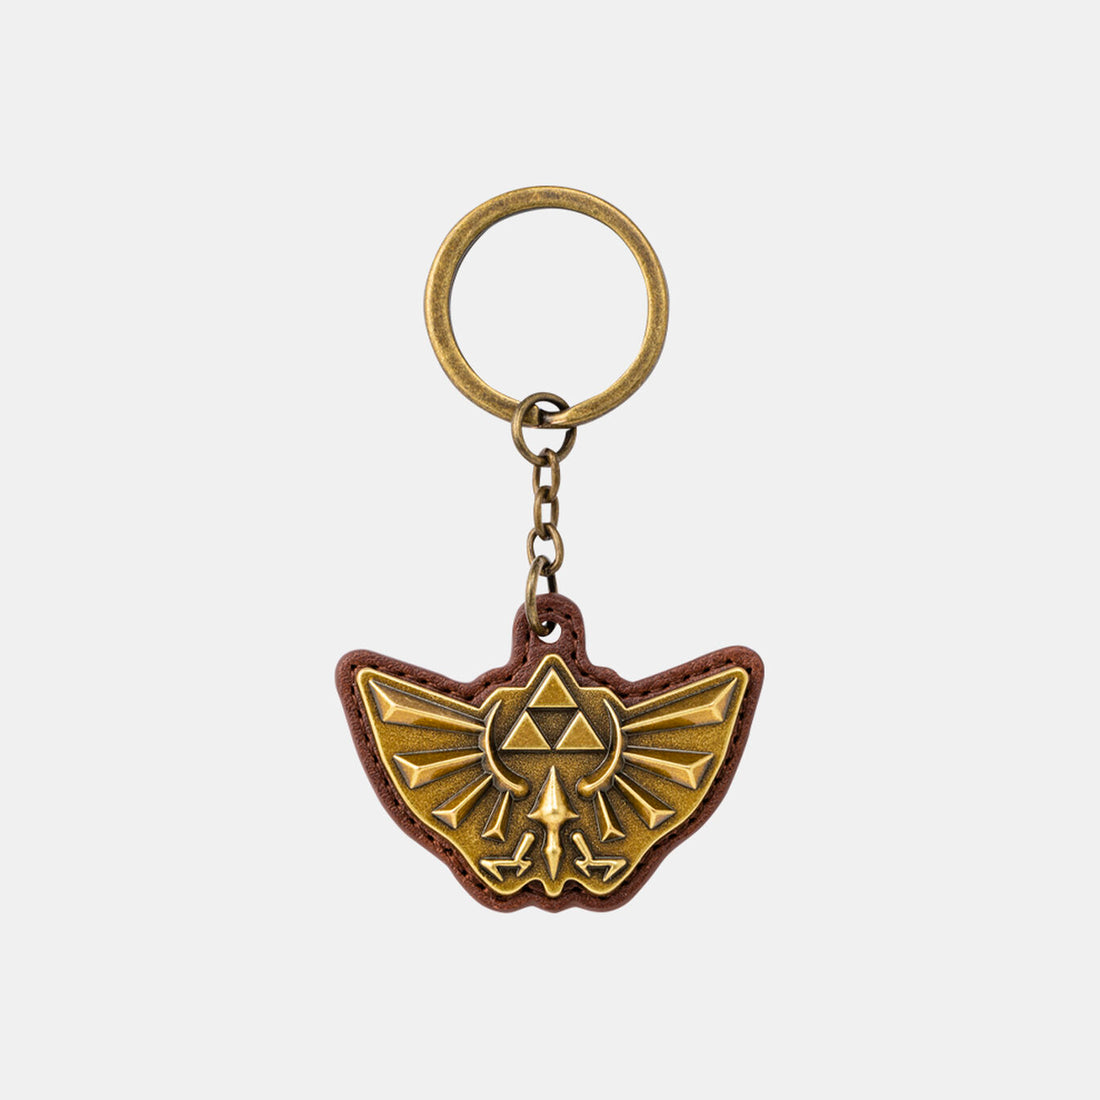 The Legend of Zelda keychain